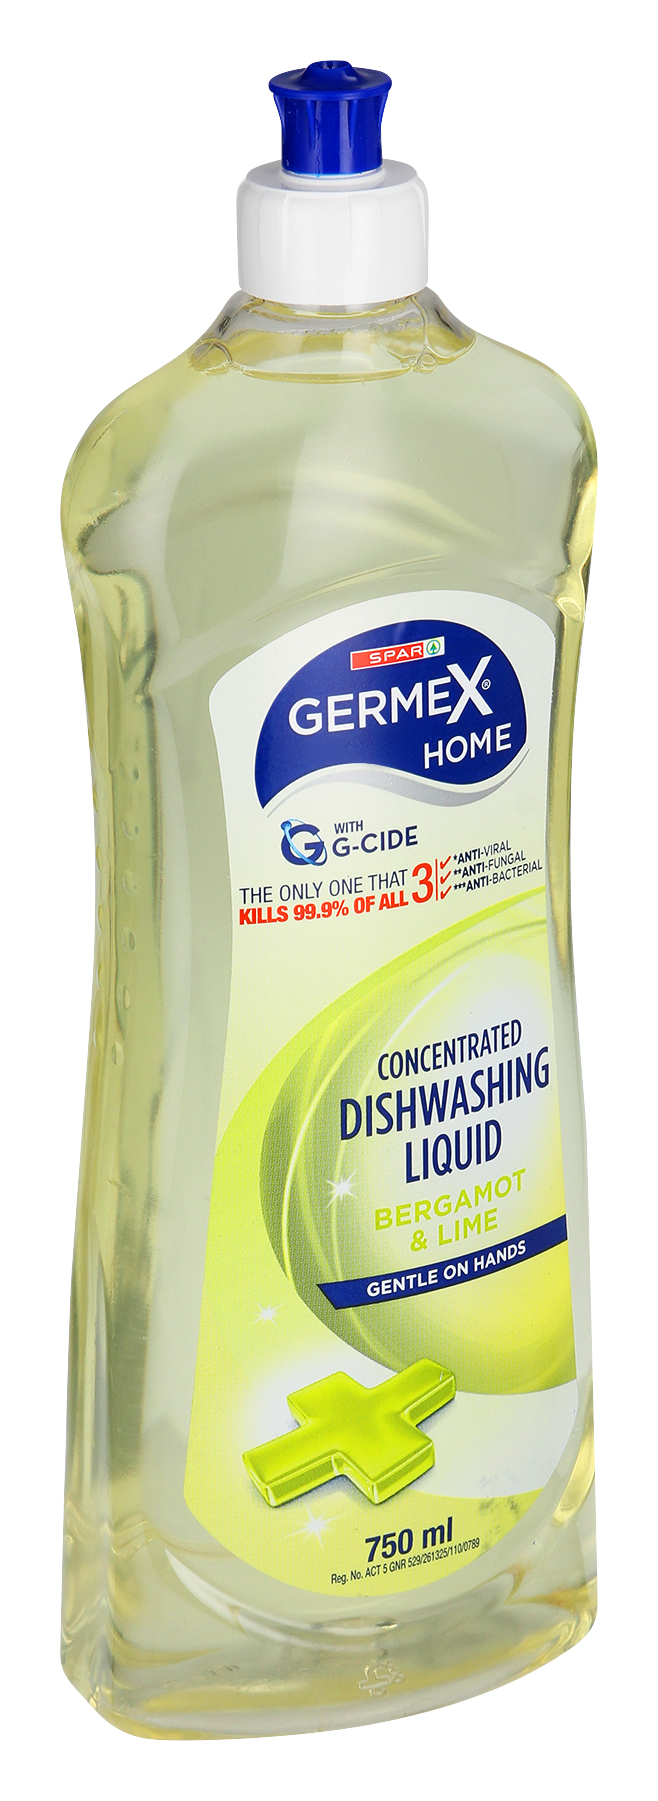 germex dishwashing liquid bergamot & lime 